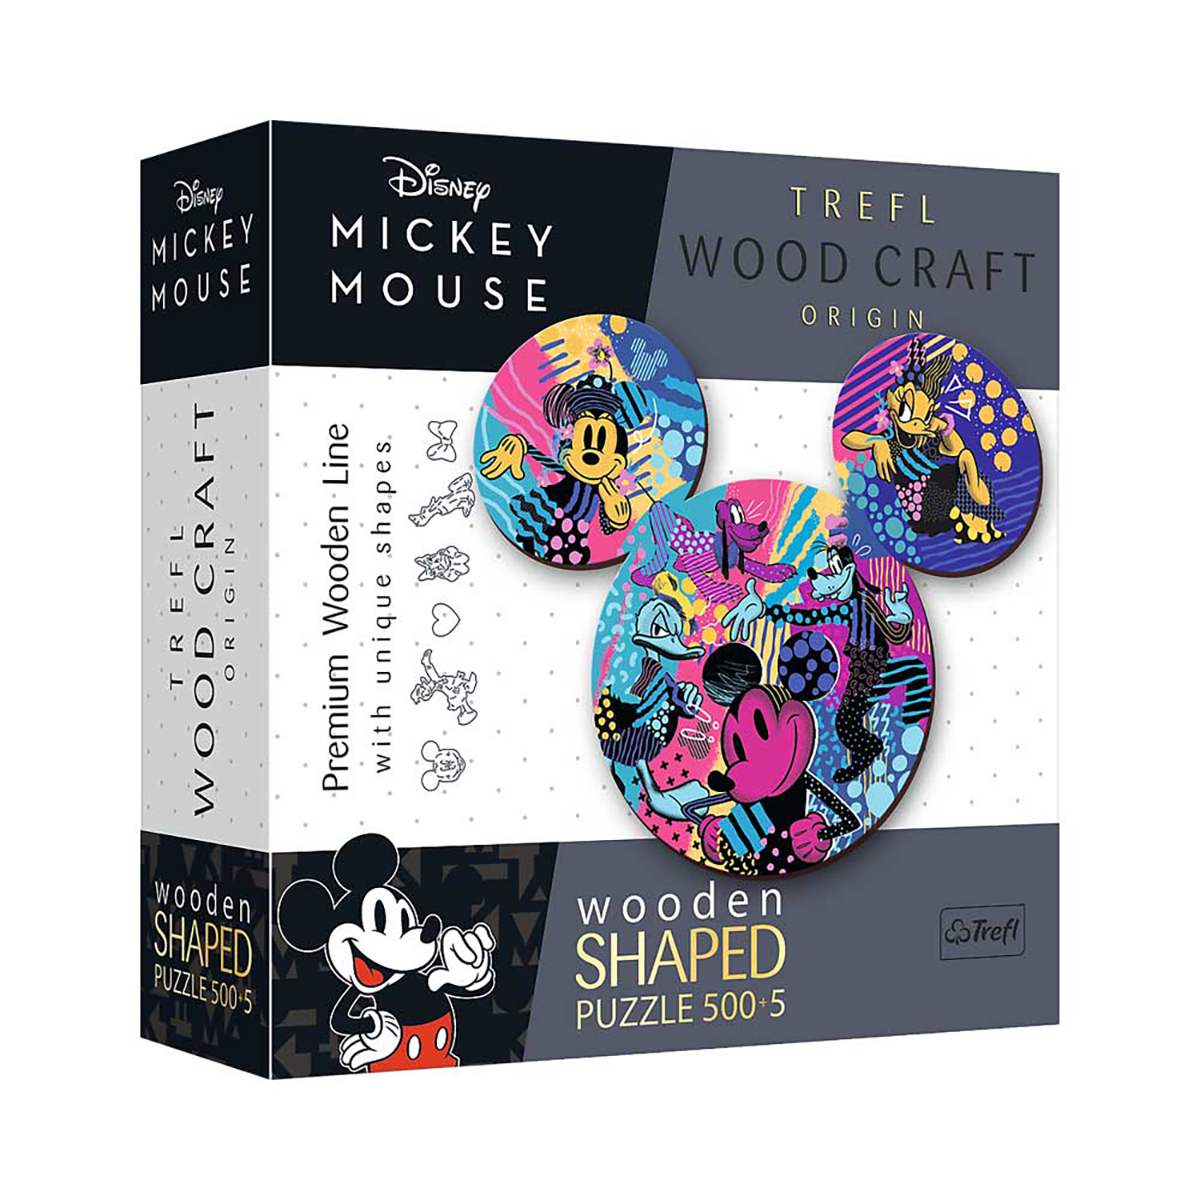 Die Puzzle TREFL ikonische Mouse Mickey